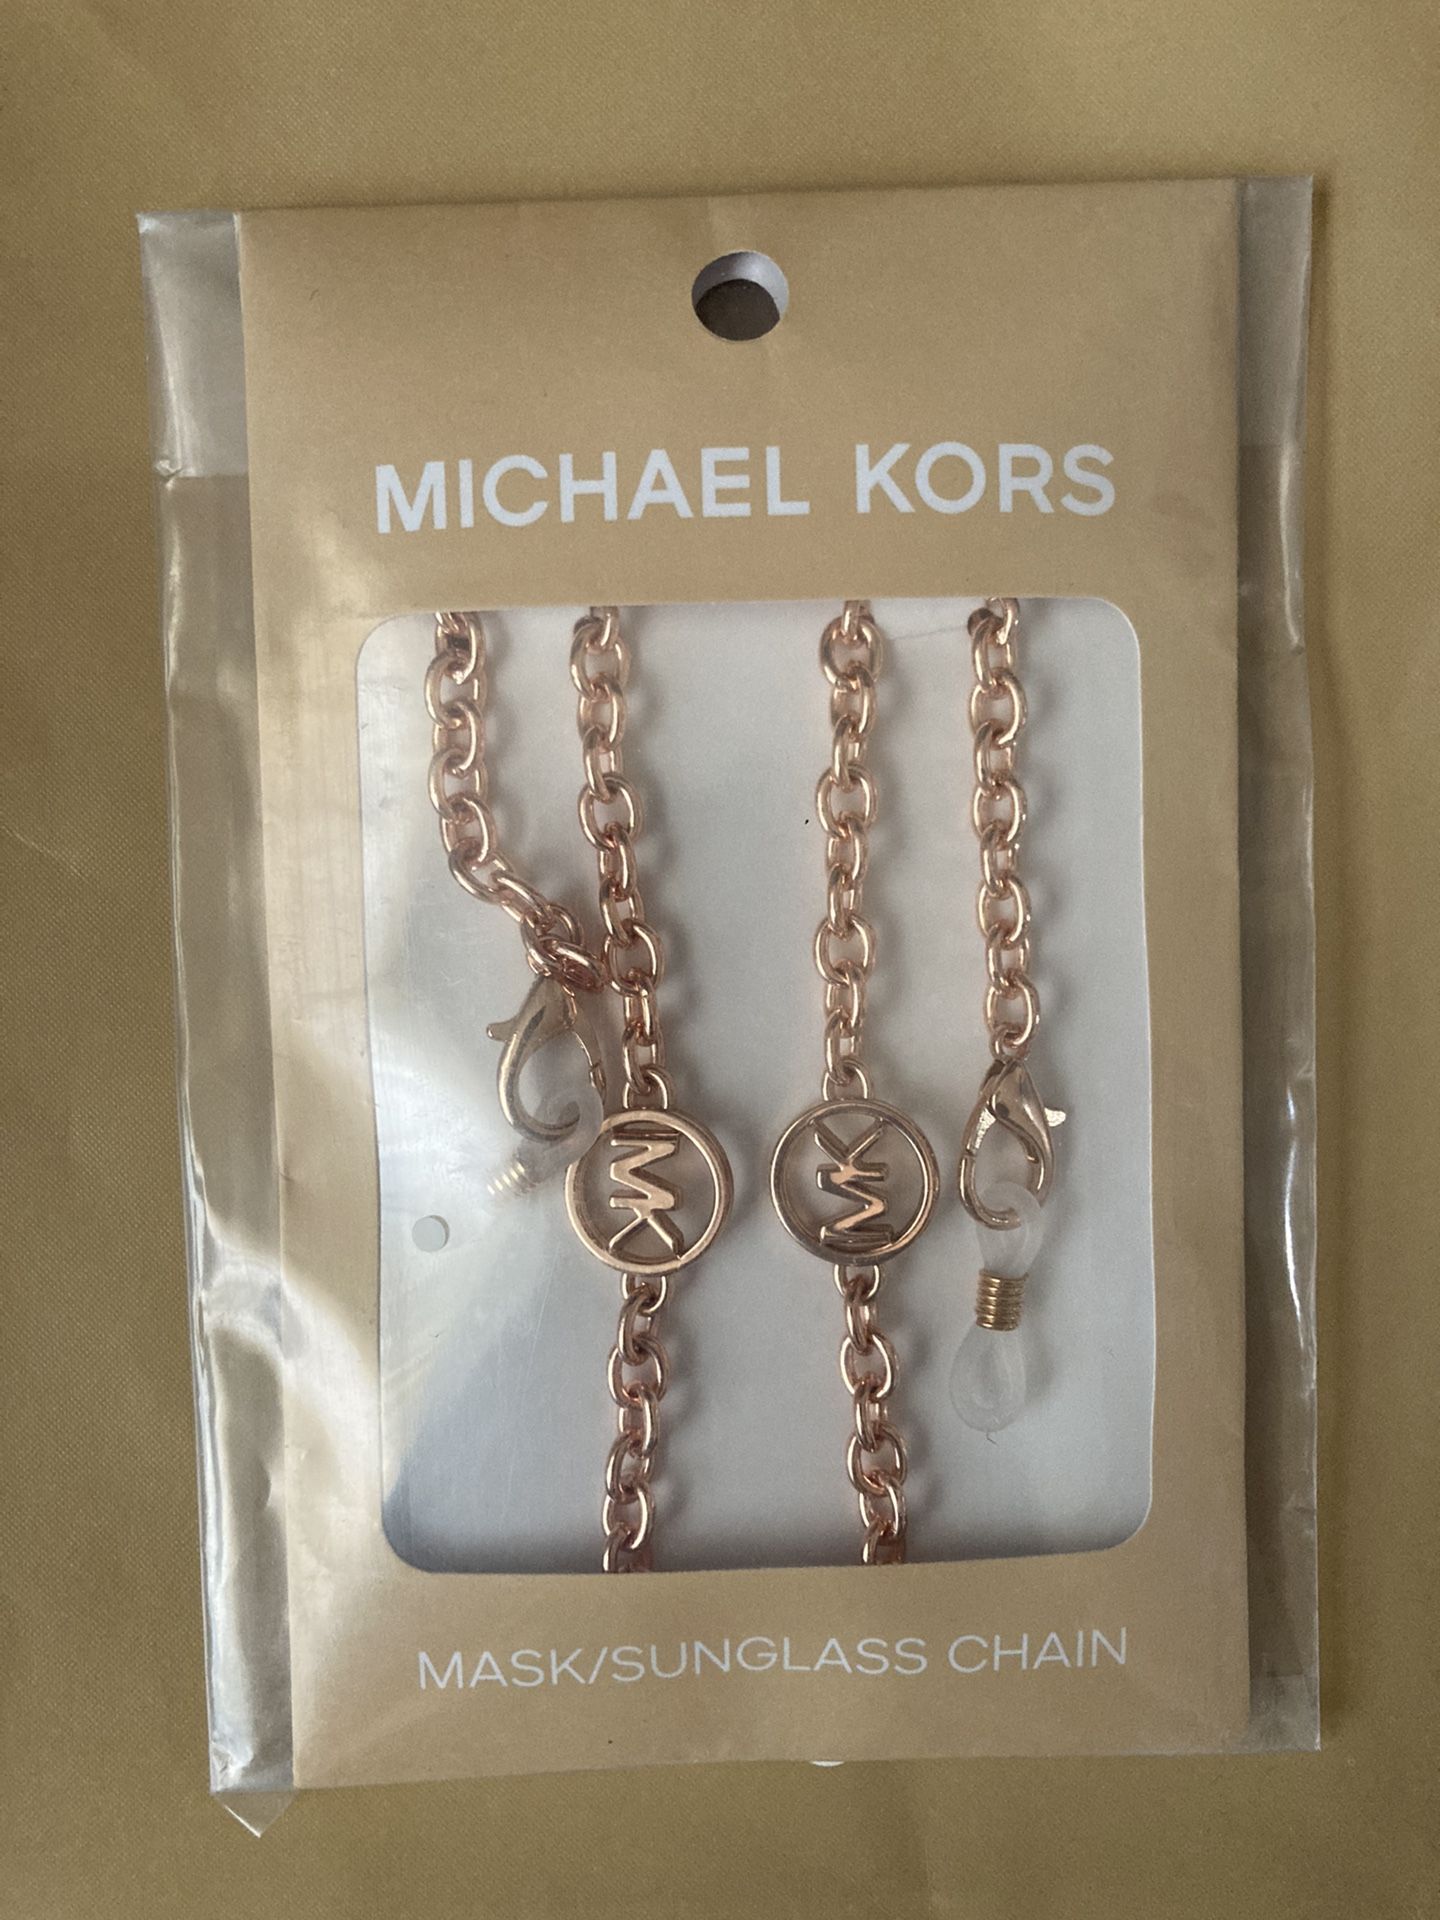 NEW, sealed Michael Kors mask/sunglass chain, rose gold